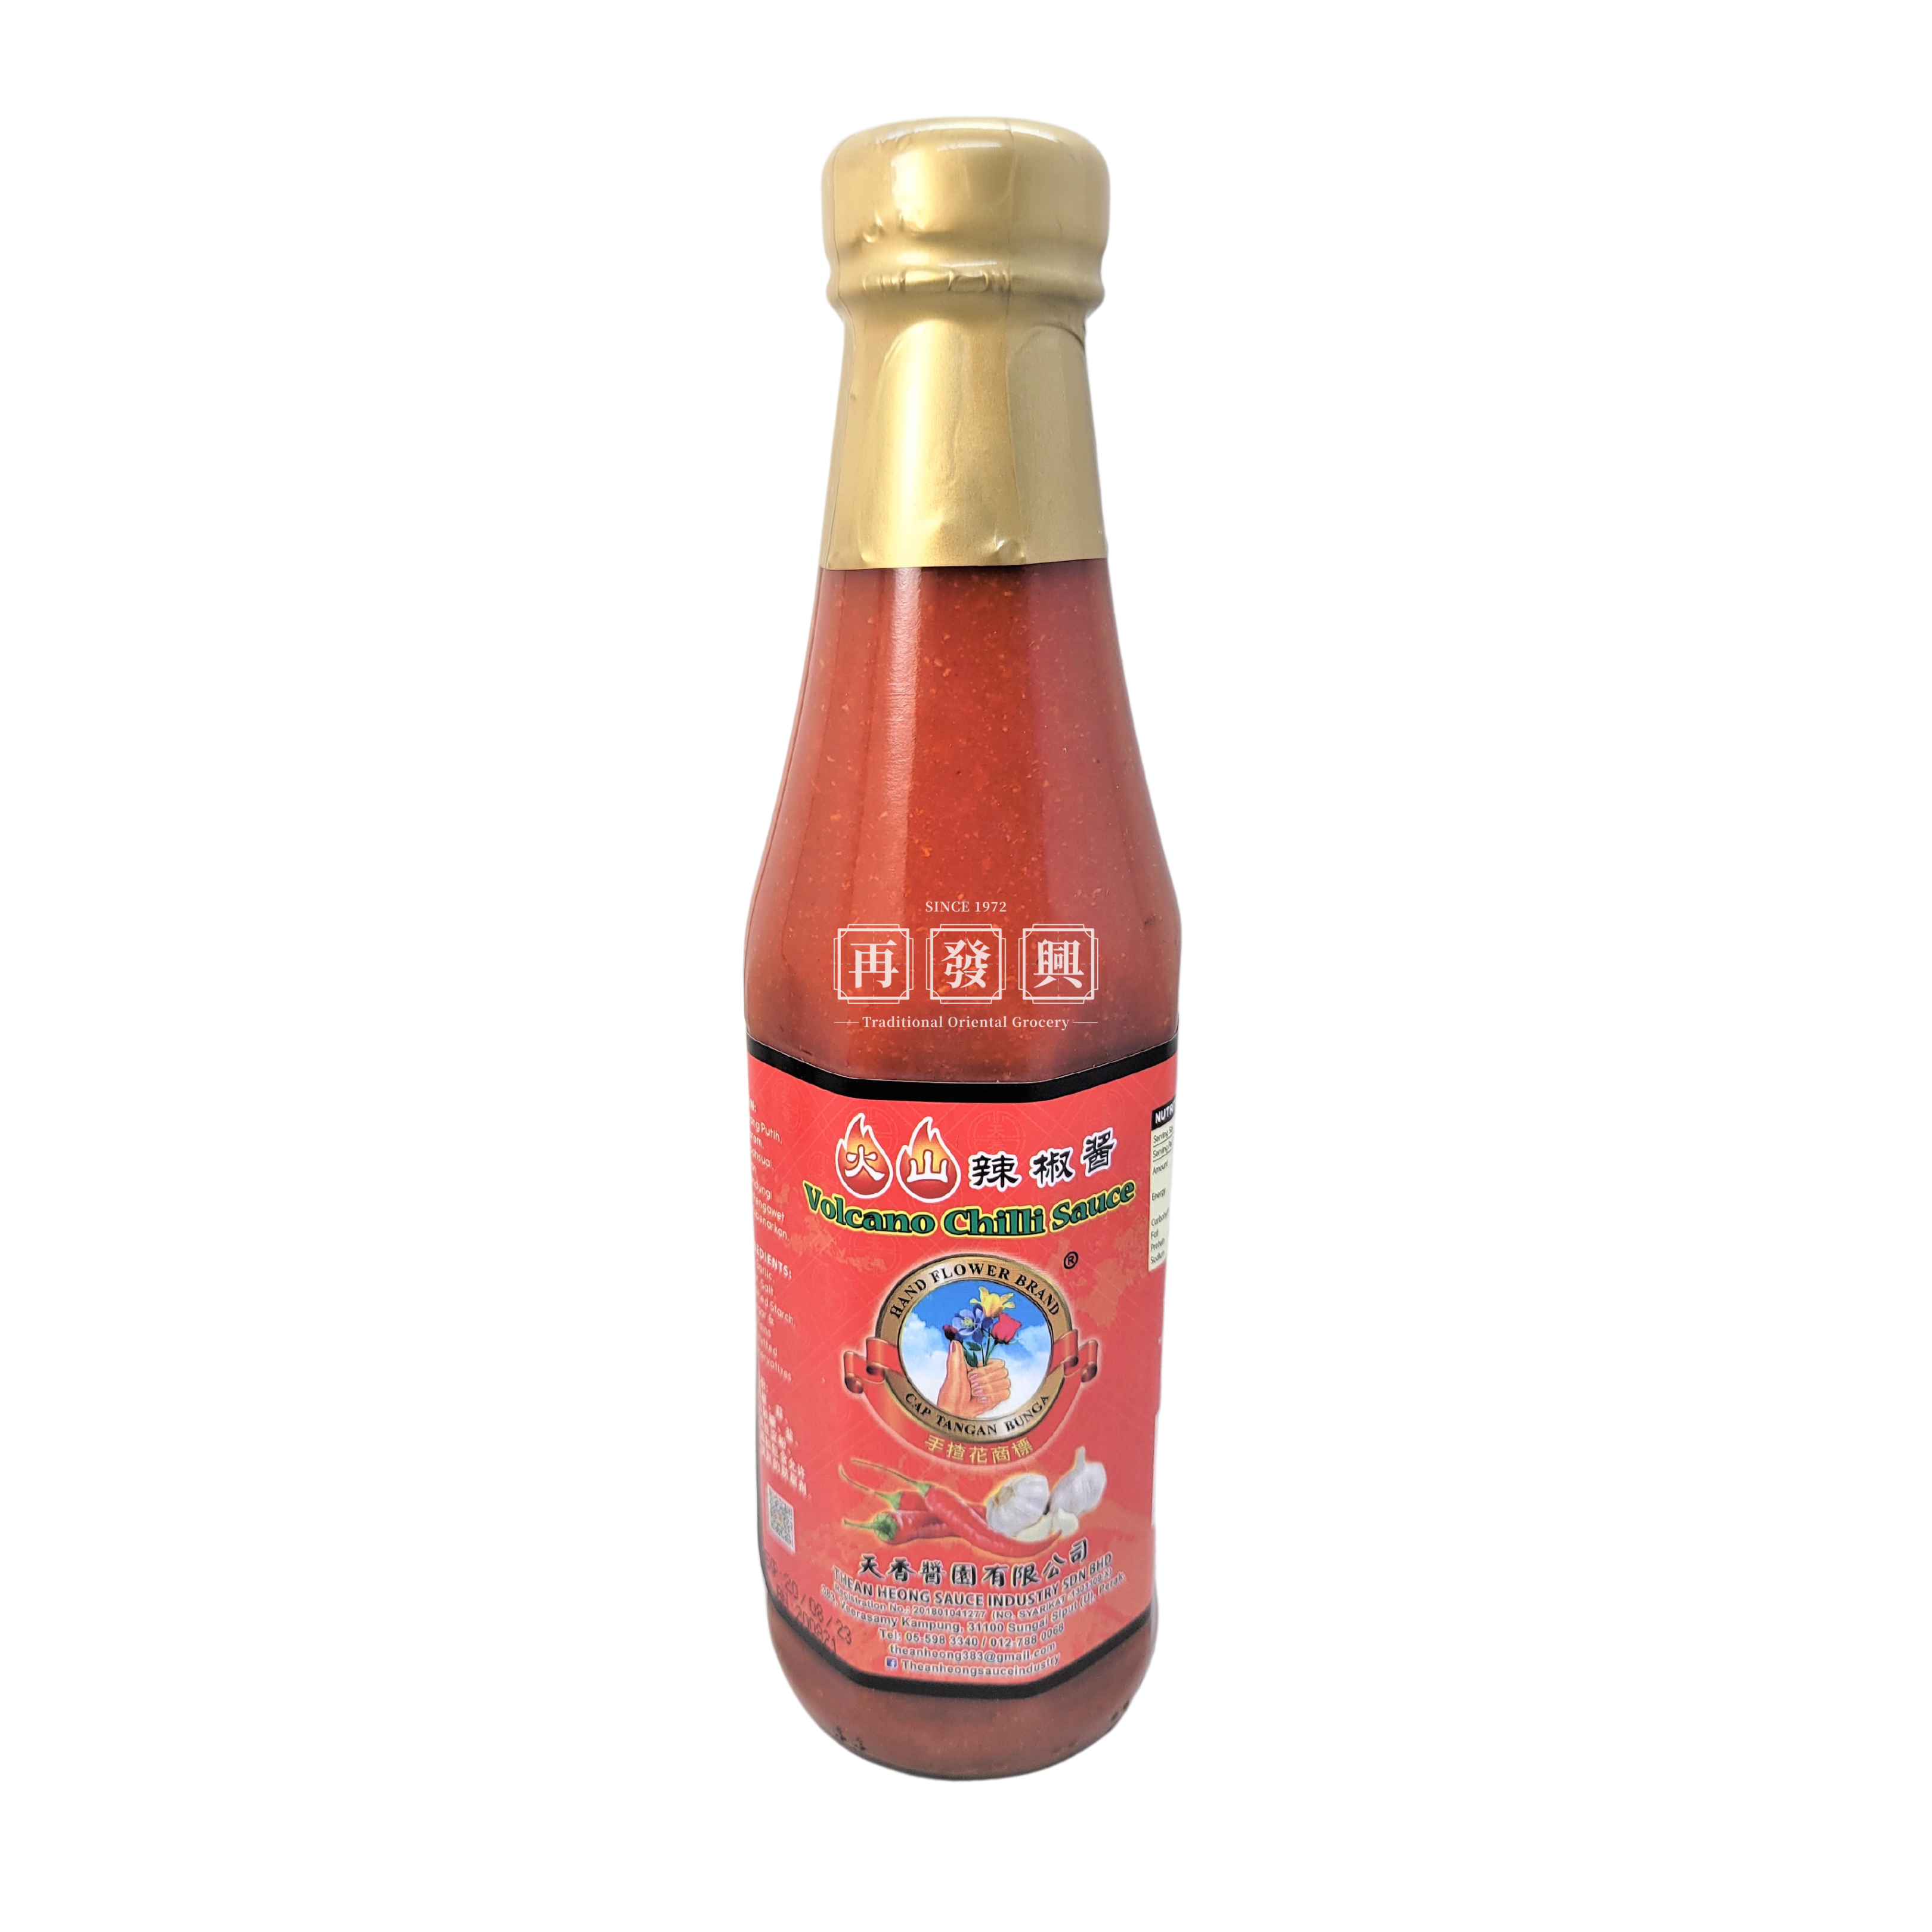 Handflower Volcano Chili Sauce 手揸花火山辣椒酱 320ml